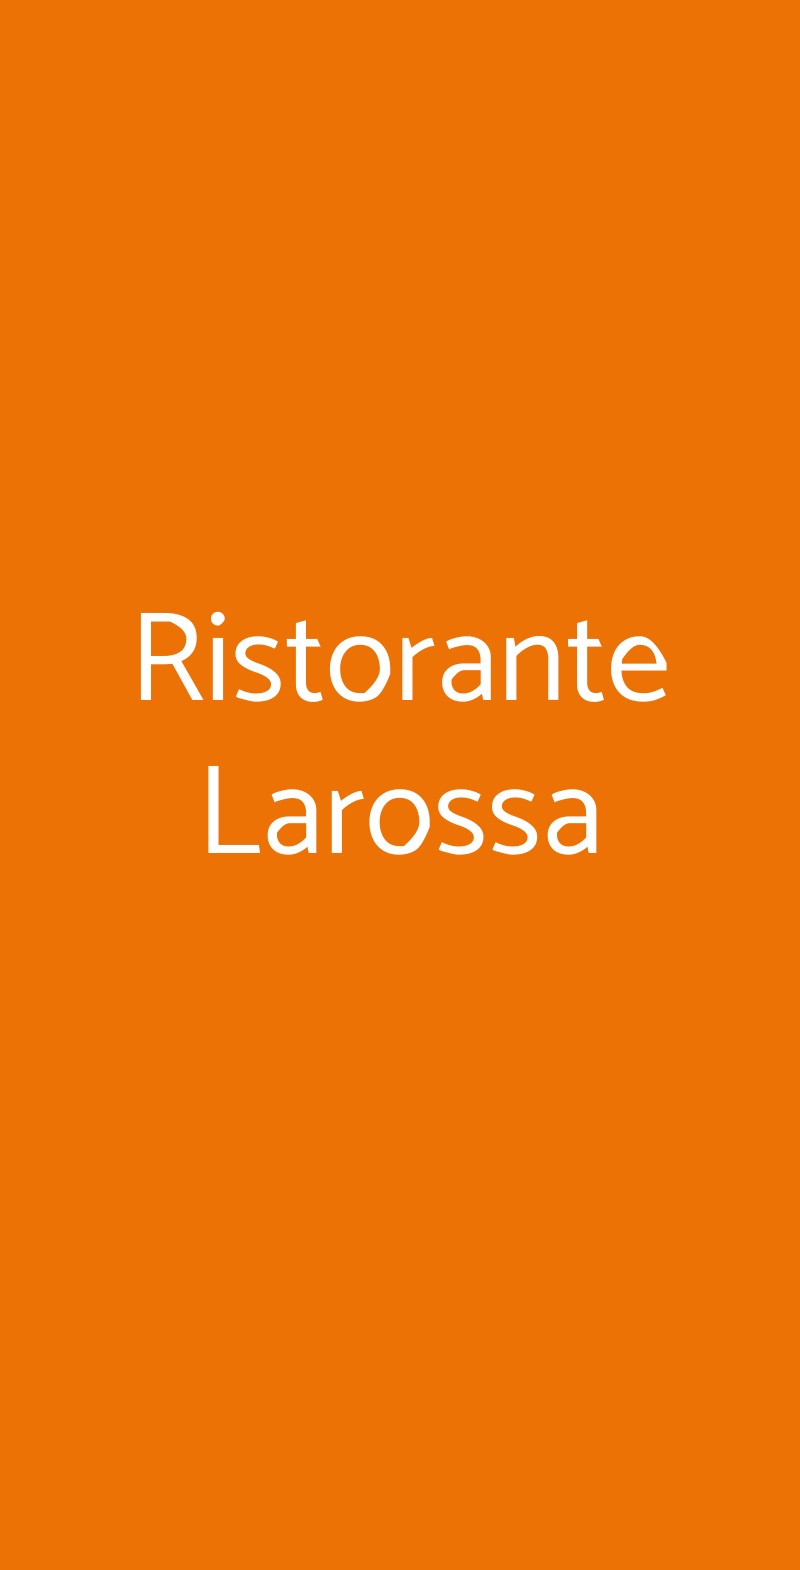 Ristorante Larossa Alba menù 1 pagina